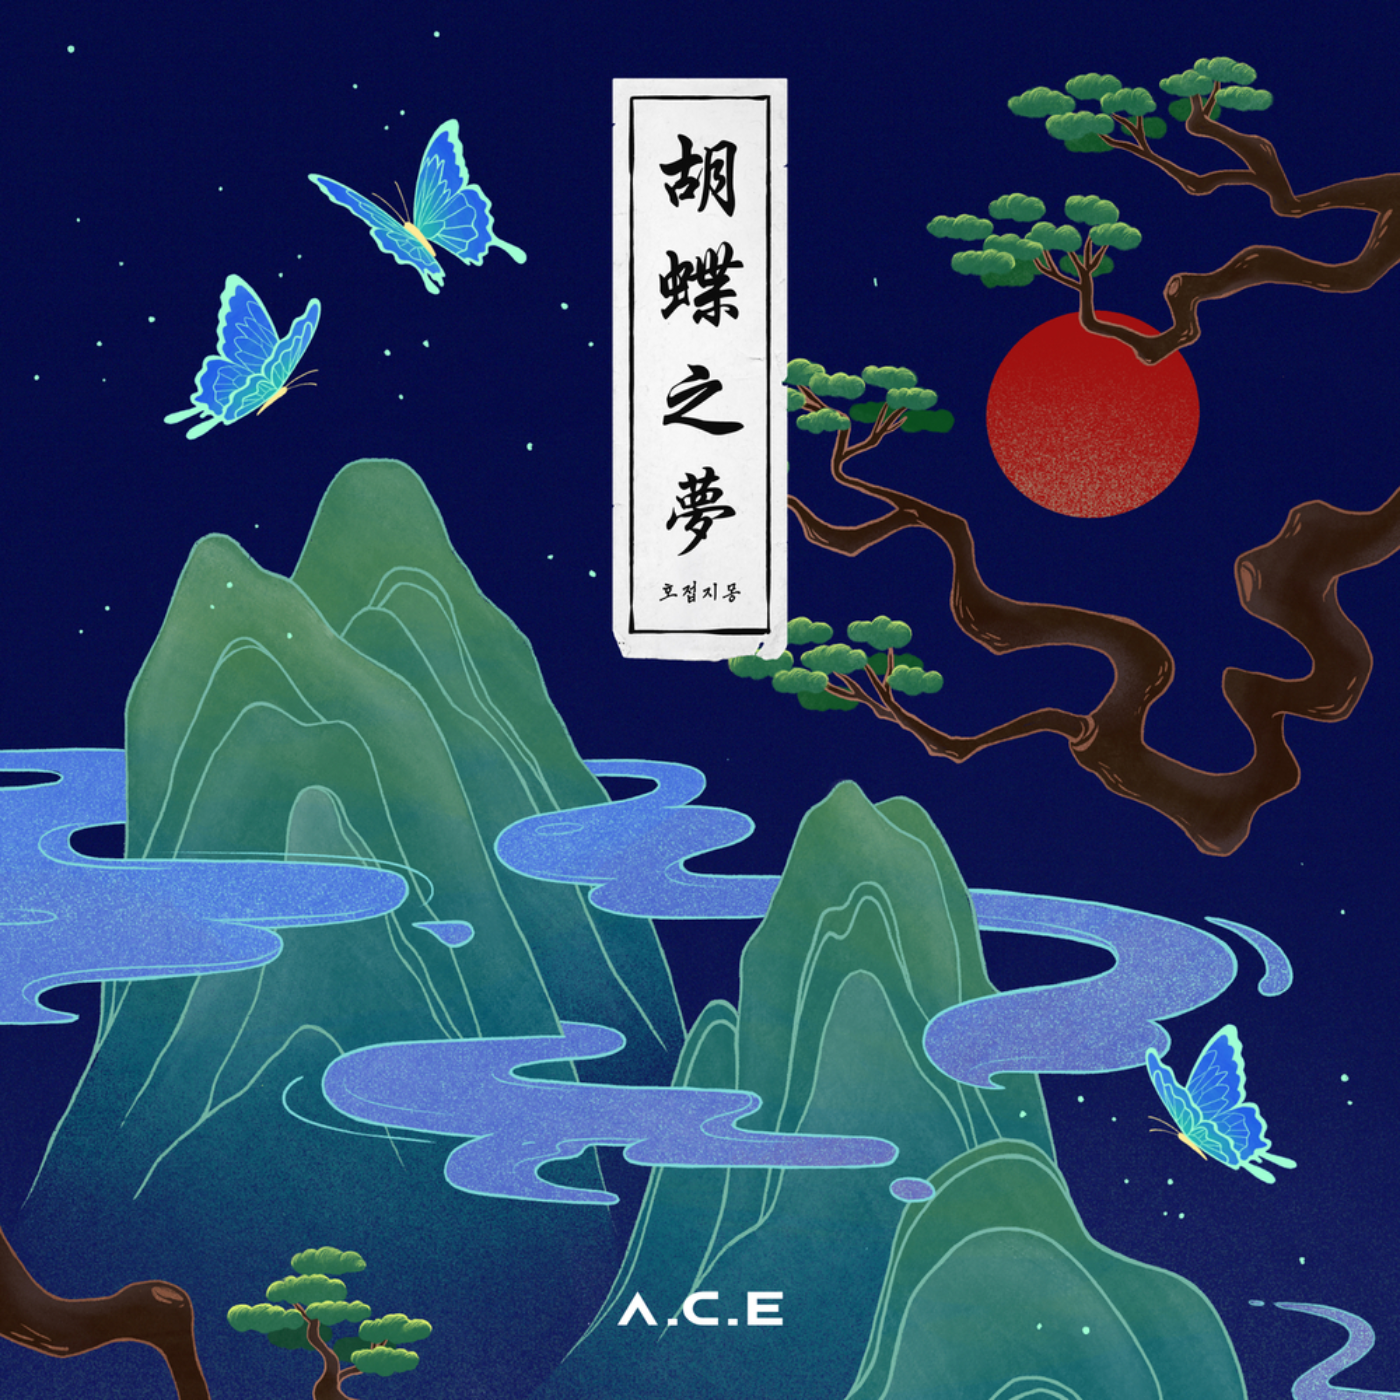 A.C.E - HZJM: The Butterfly Phantasy digital cover art